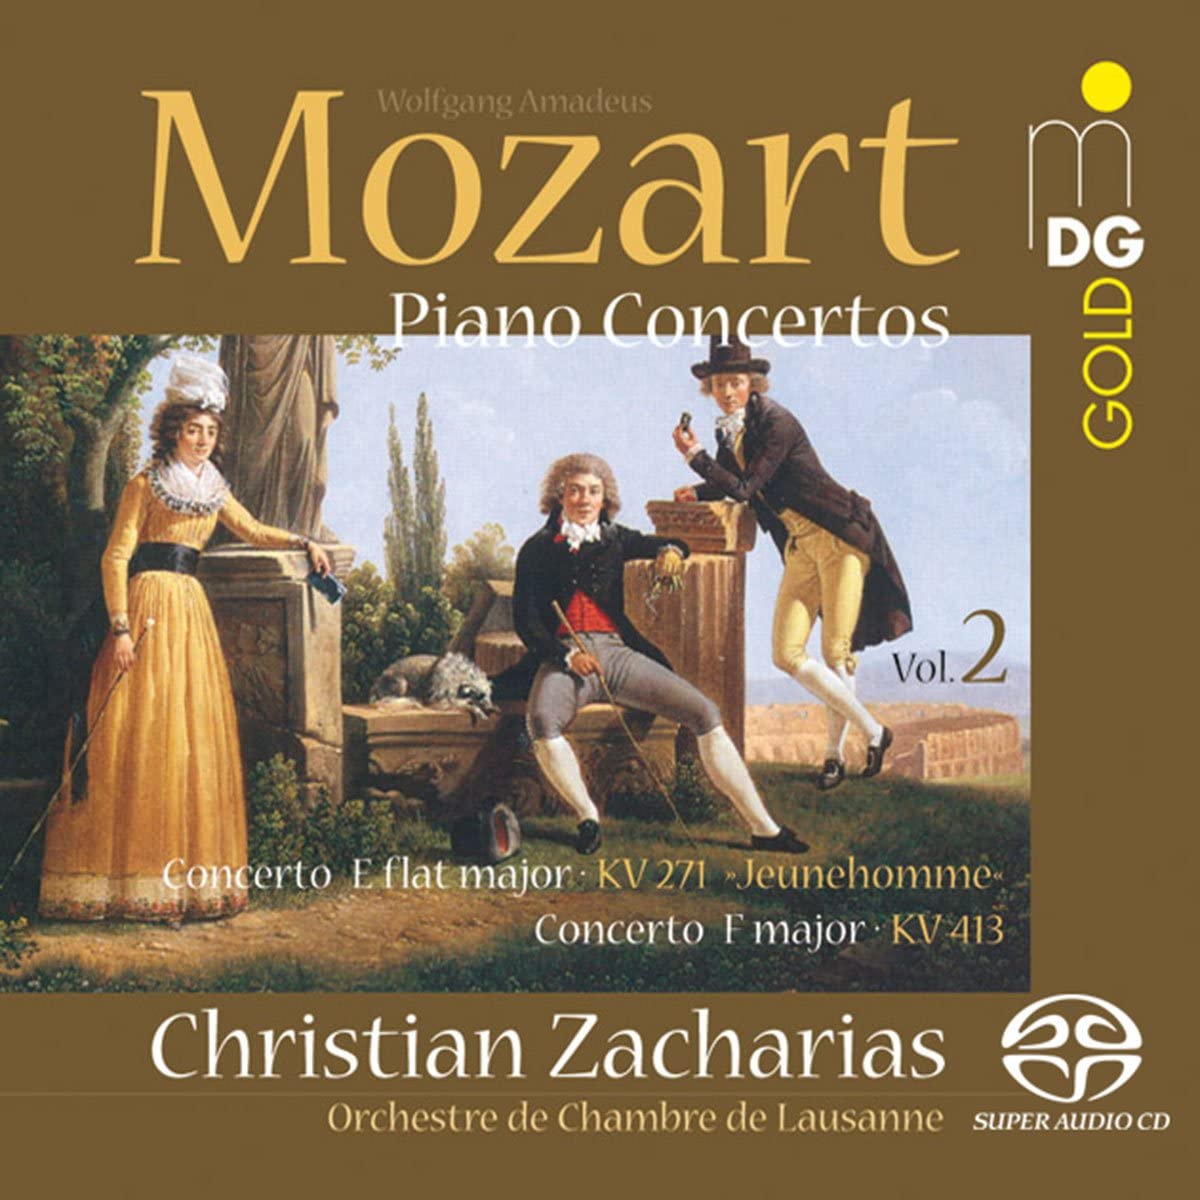 Mozart: Piano concertos (KV 271, KV 413) vol. 2